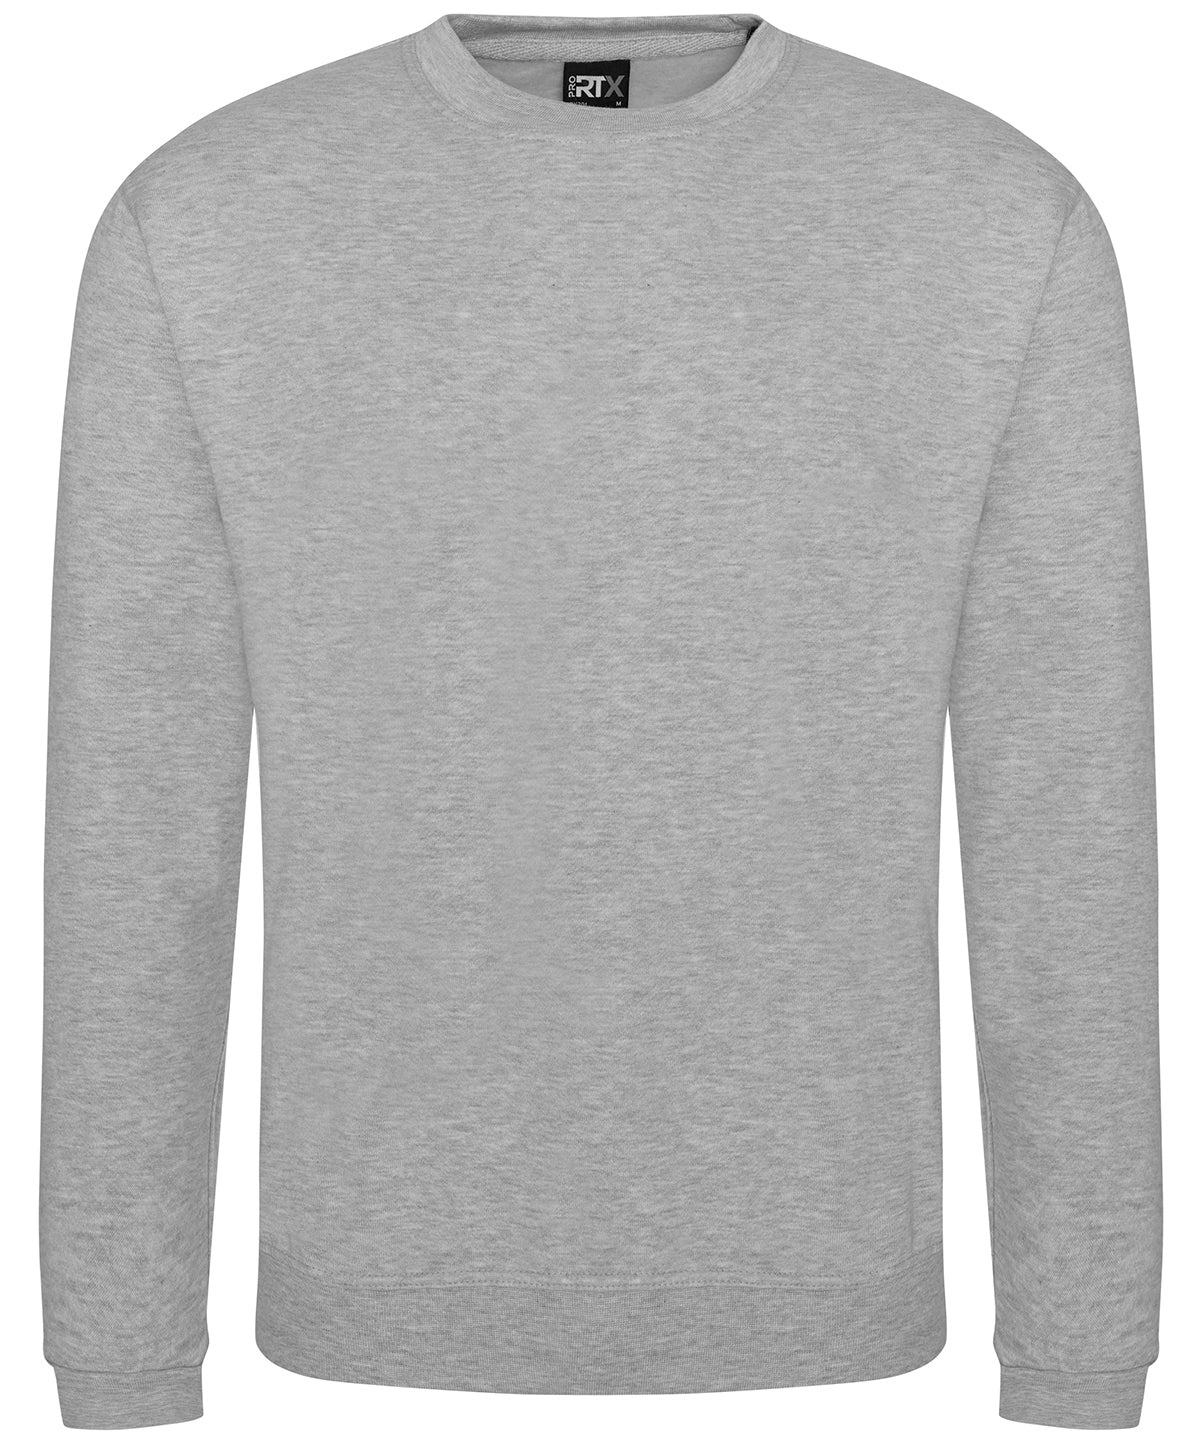 Pro RTX Workwear Sweatshirt